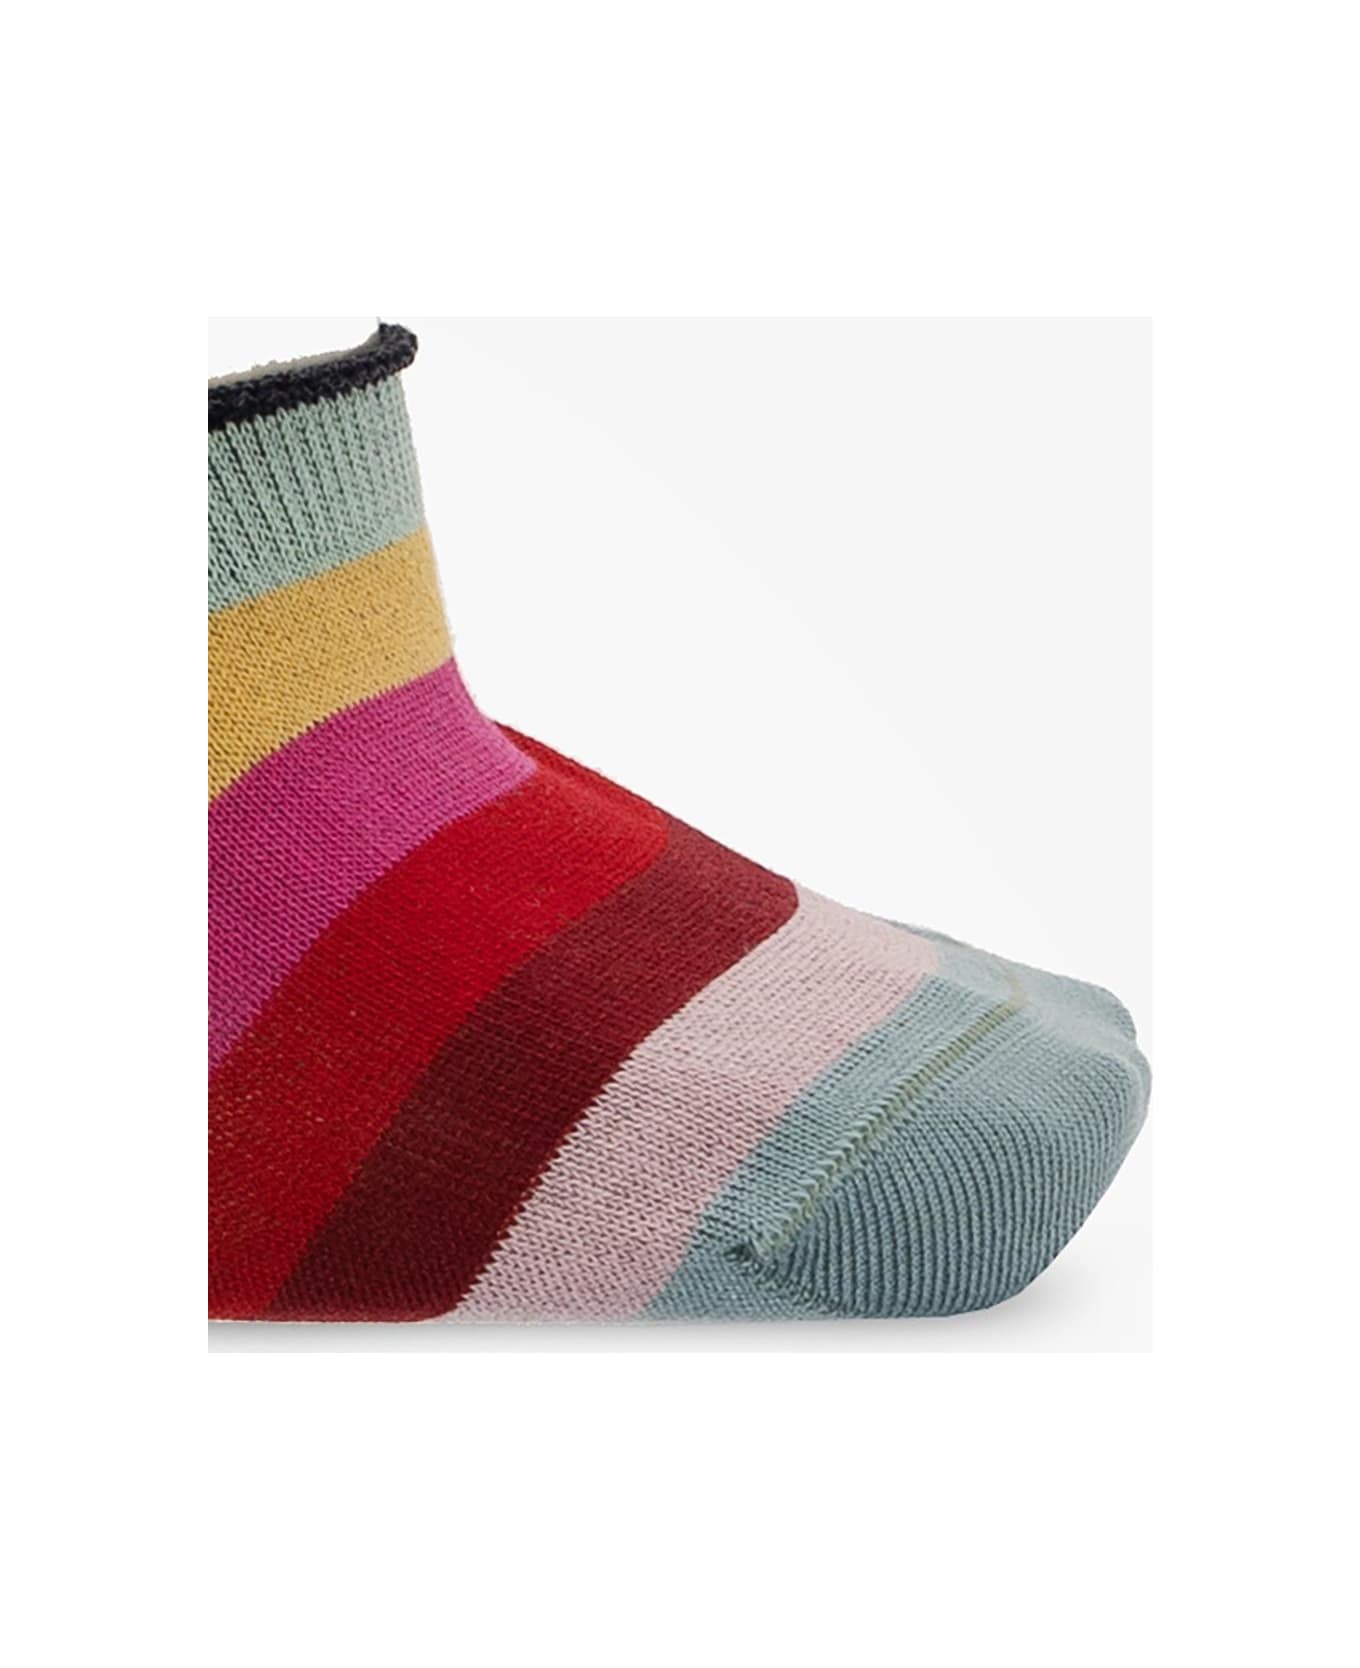 Paul Smith Striped Socks - NAVY